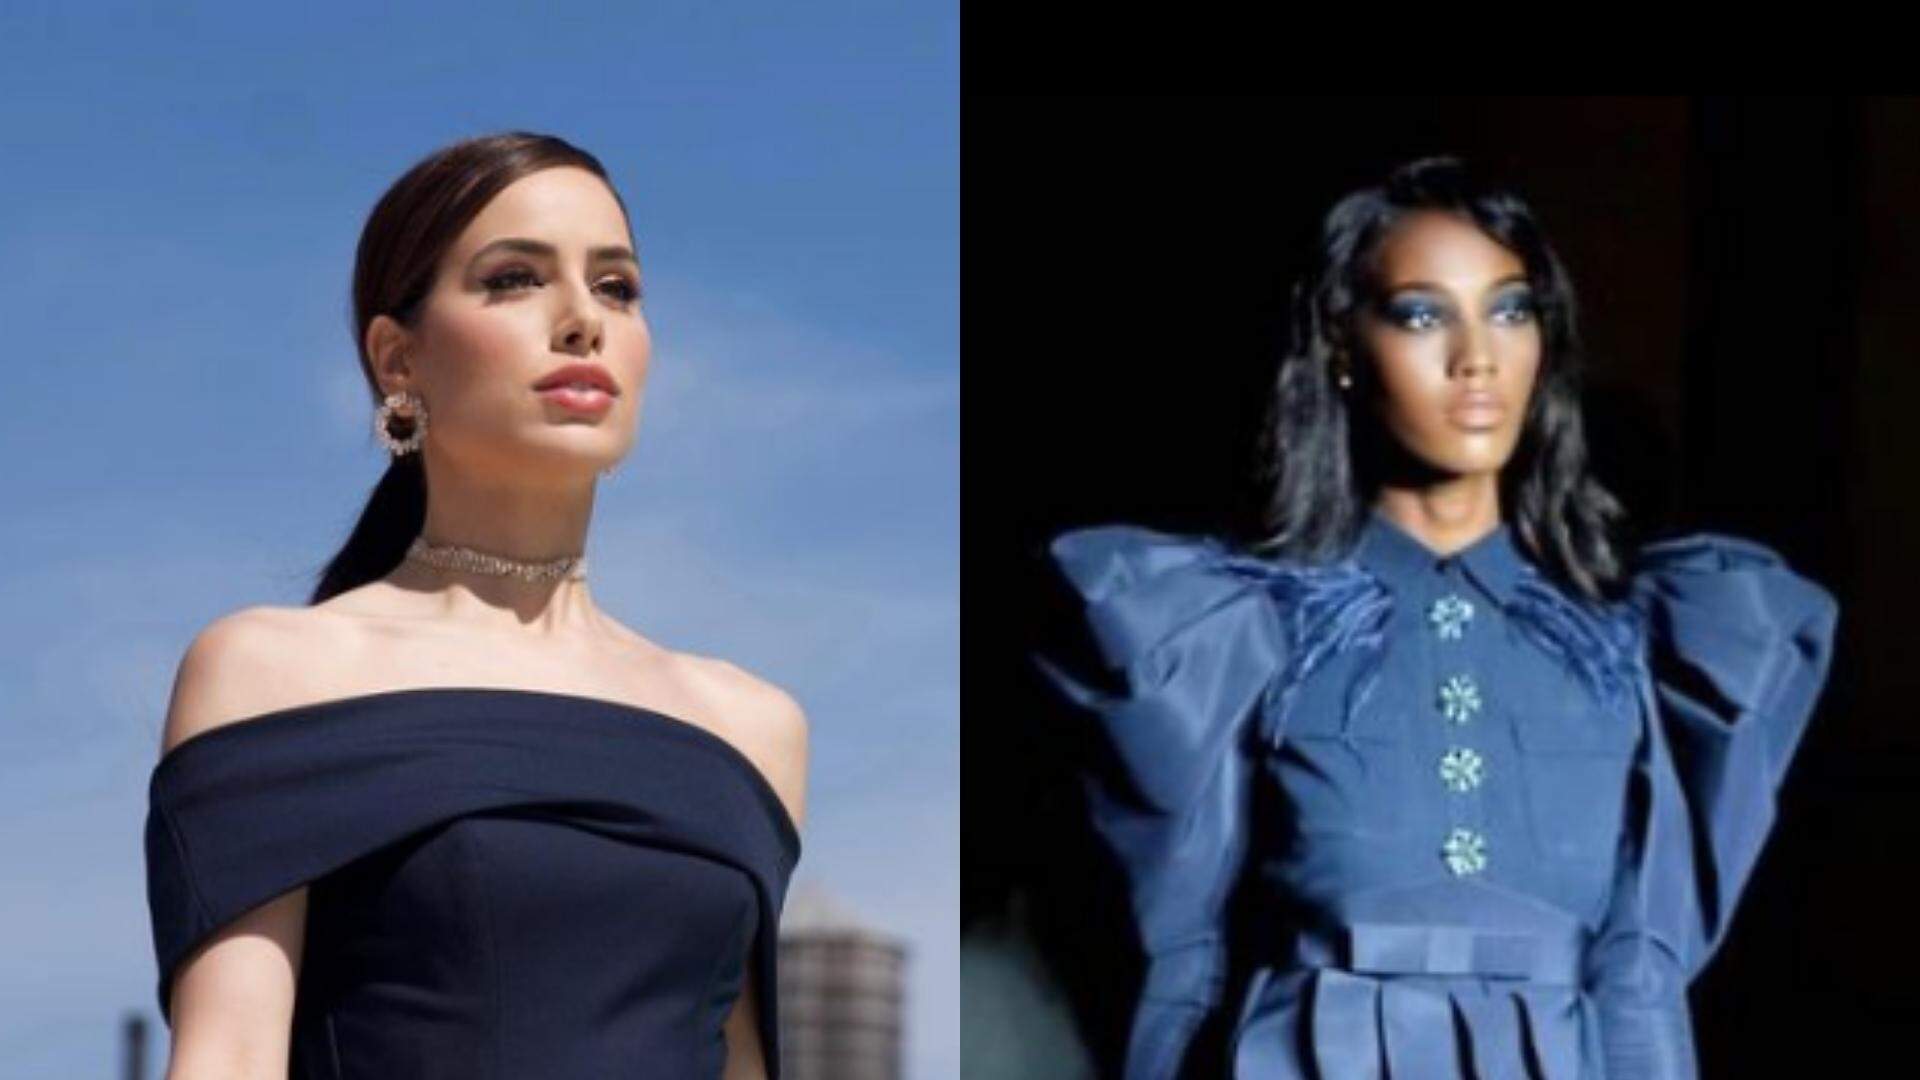 Candidatas ao Miss Universo, a Miss Brasil e a Miss Haiti, arrasaram na passarela do “NYFW”